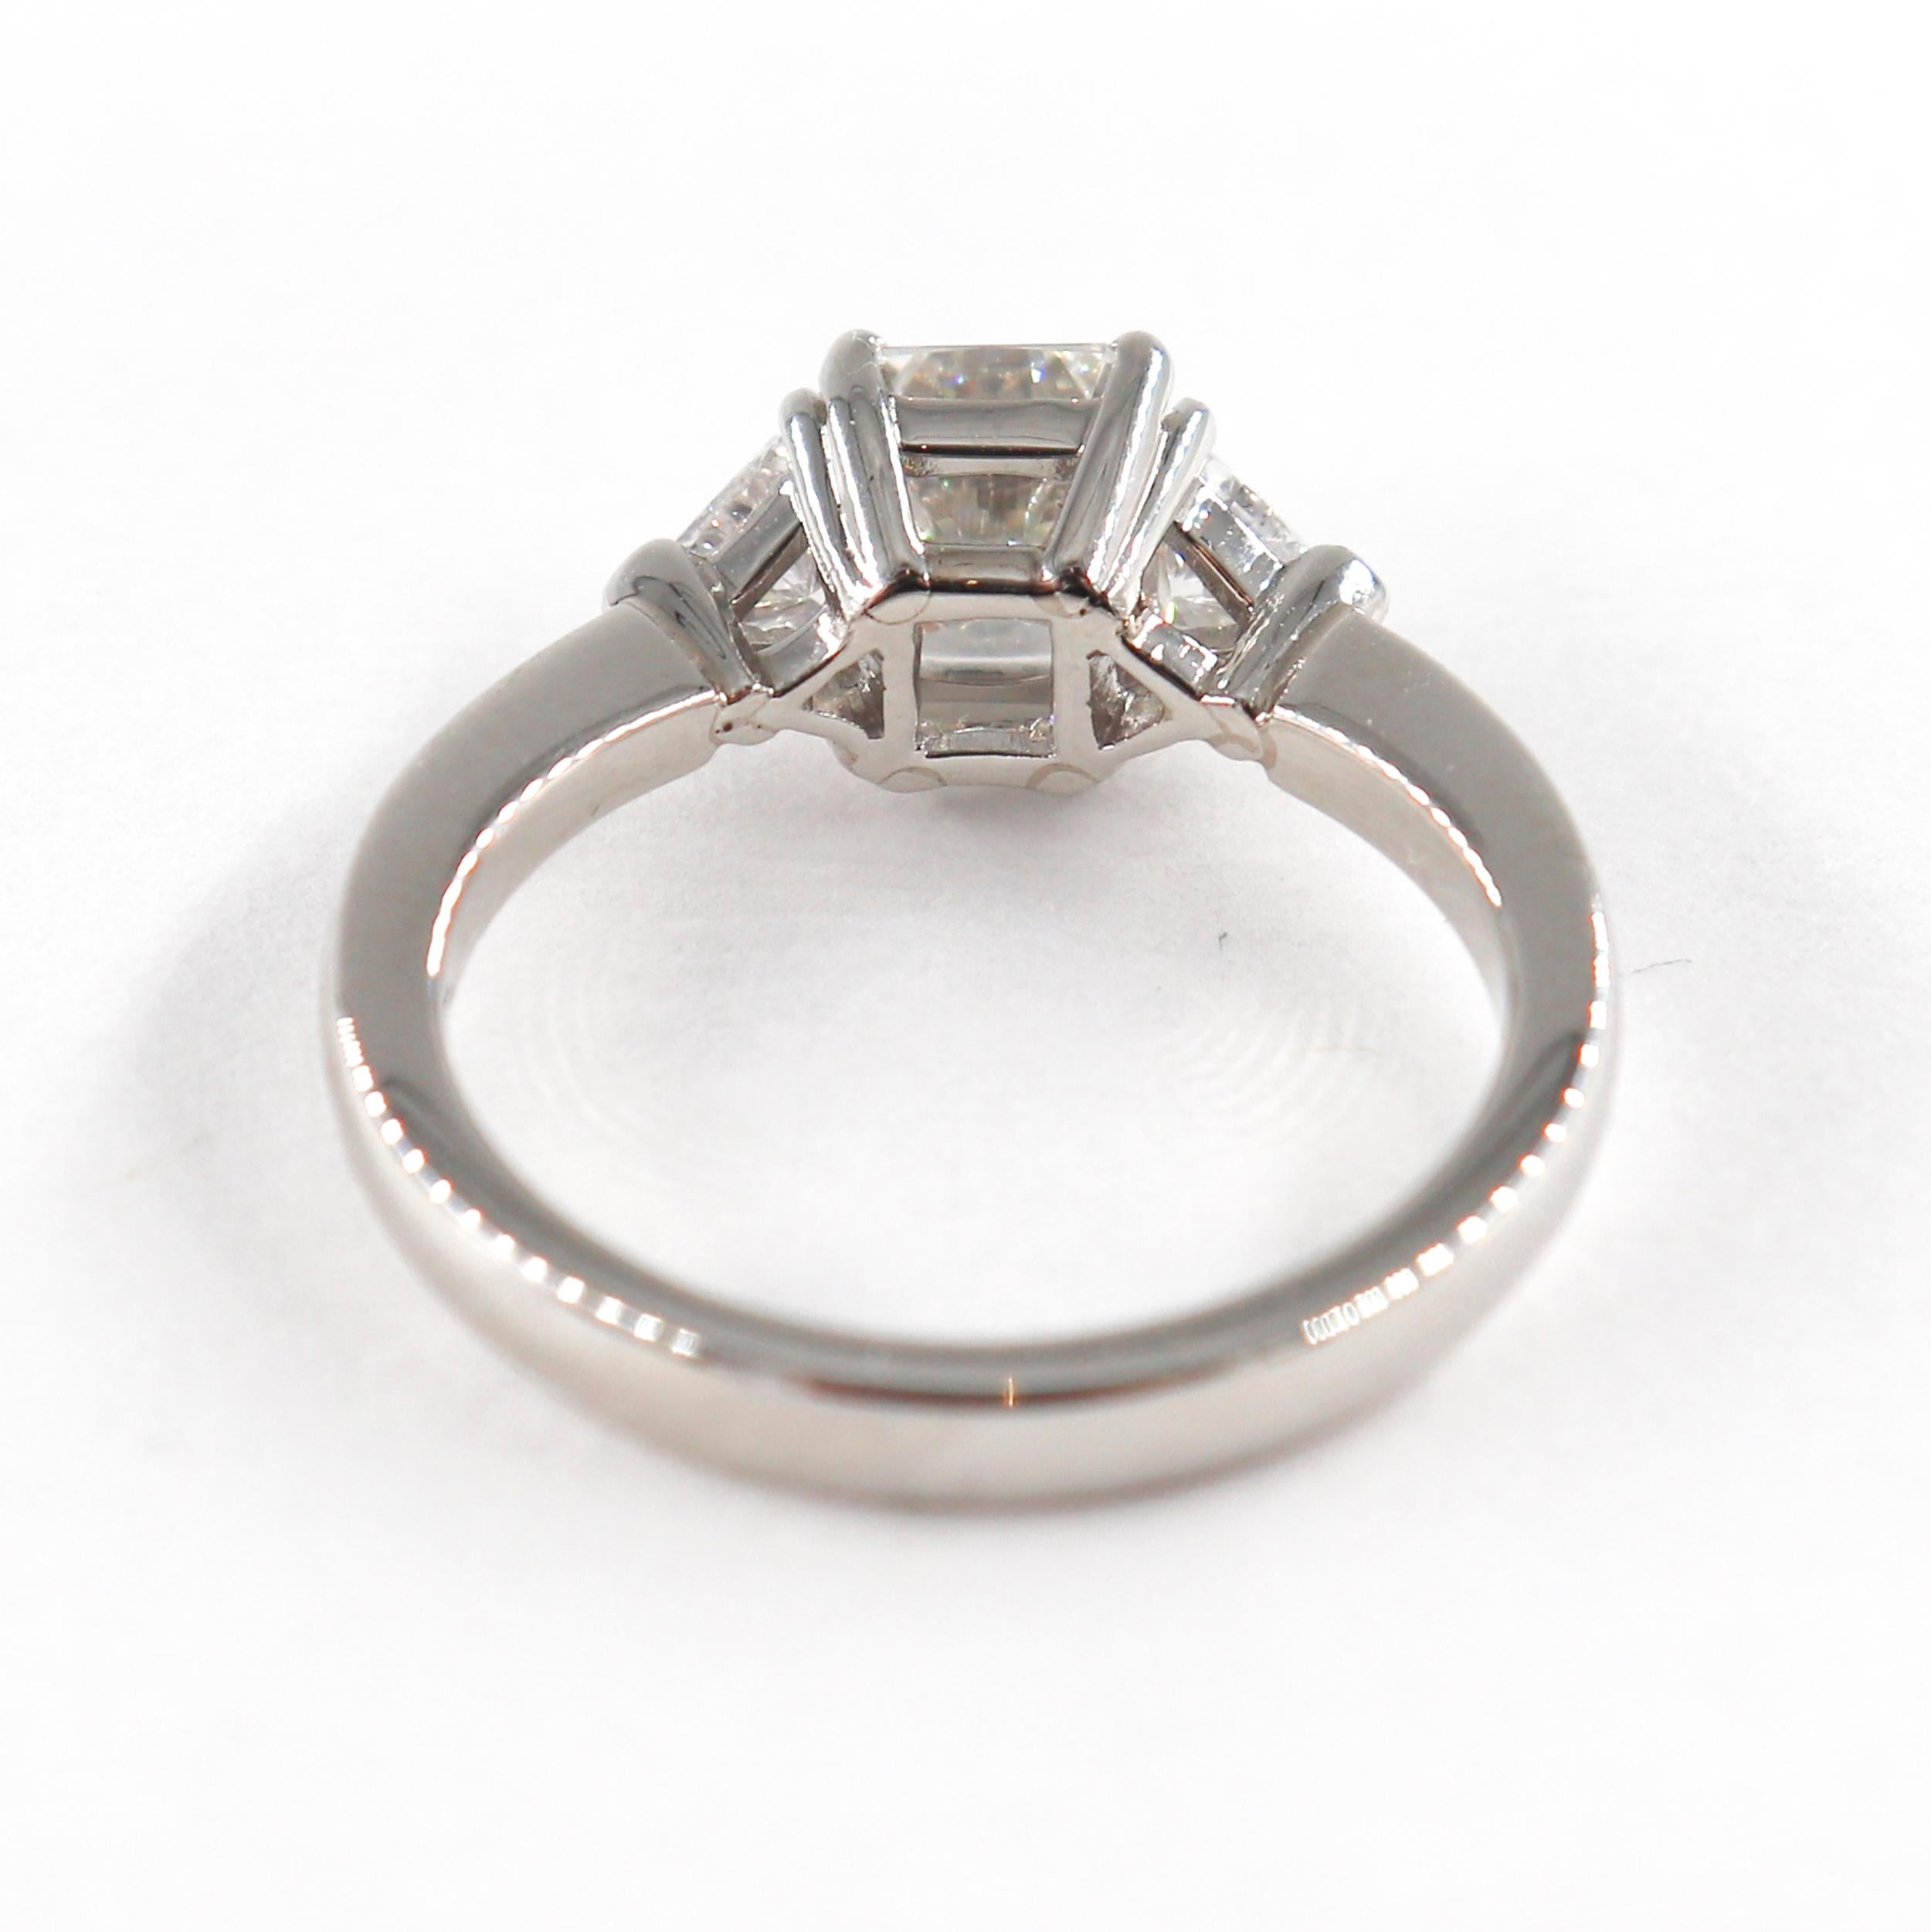 Modern J. Birnbach GIA Certified Flawless 1.09 carat Radiant Cut Diamond Ring